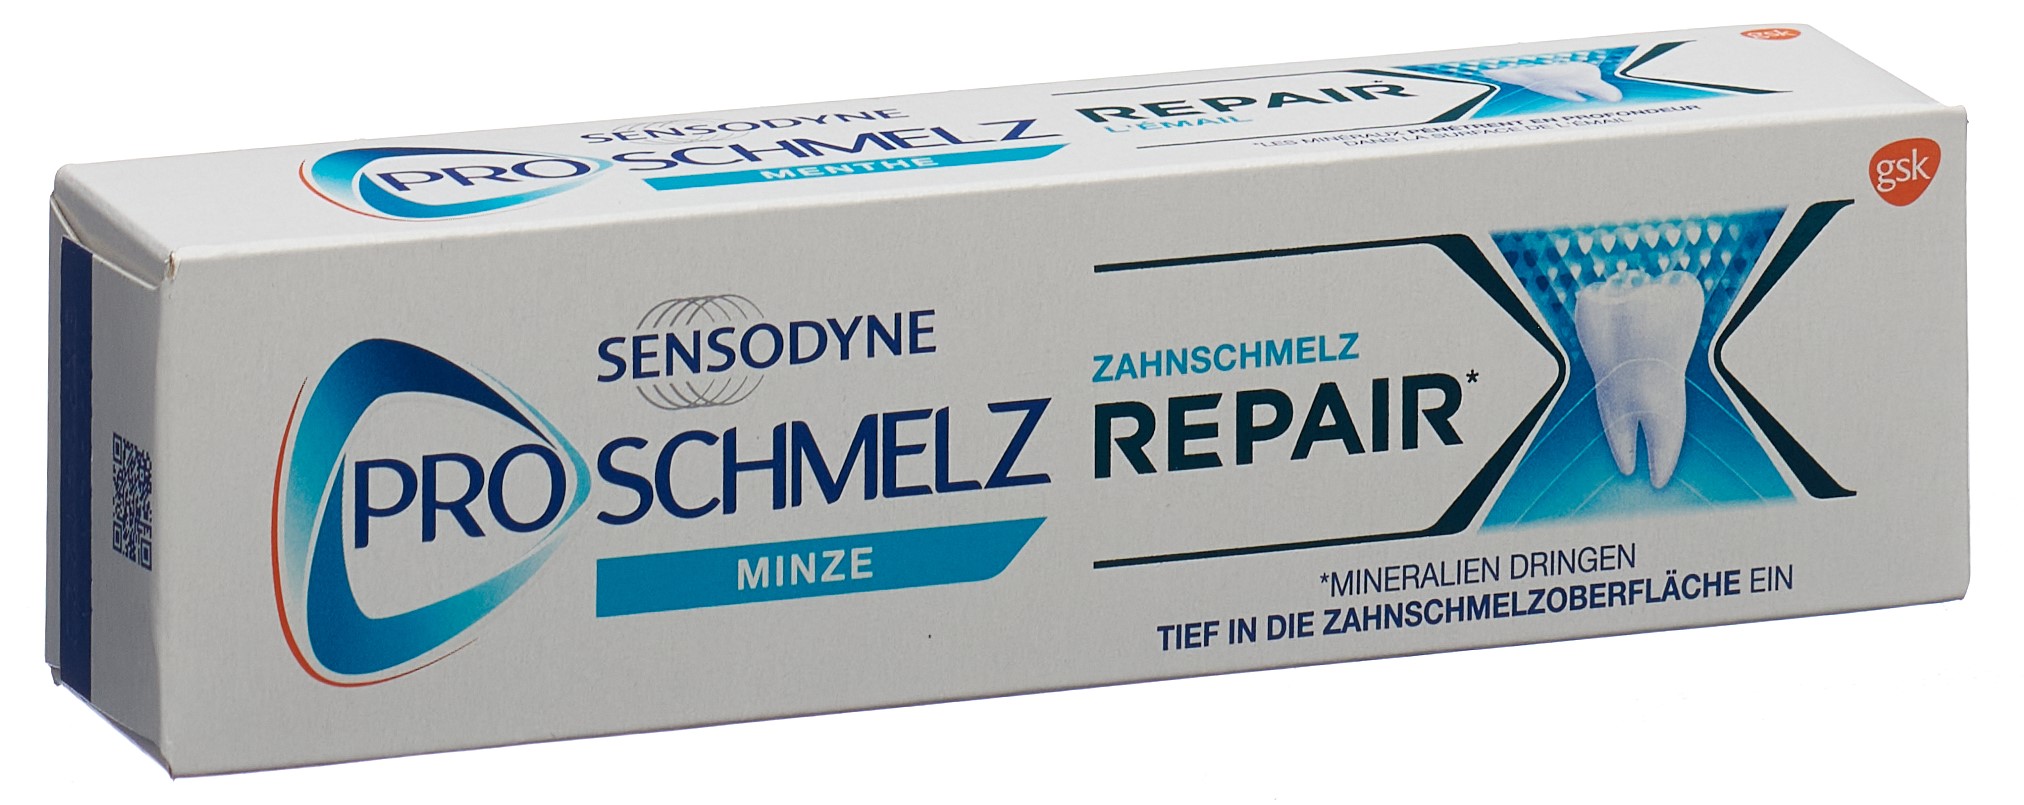 Sensodyne PROSCHMELZ Zahncreme REPAIR (75 ml)